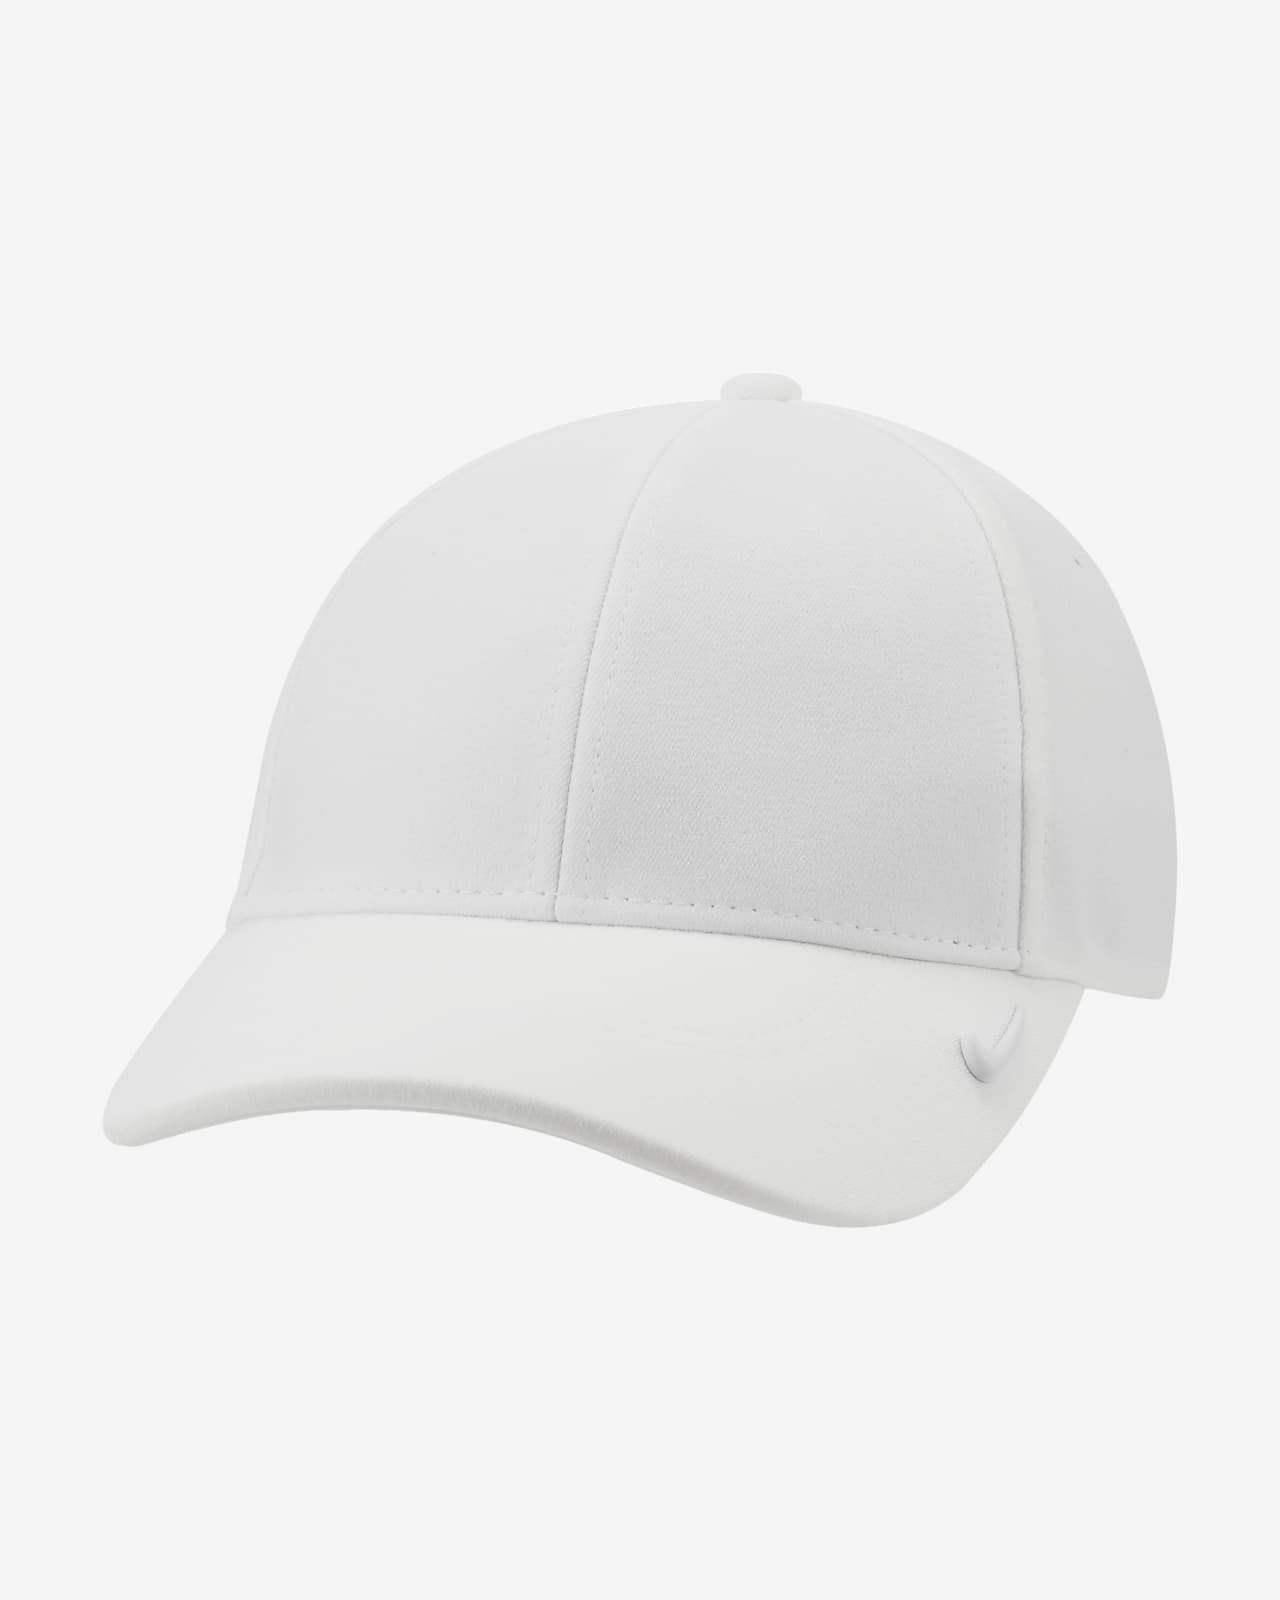 Nike Dri-FIT AeroBill One Women's Adjustable Hat